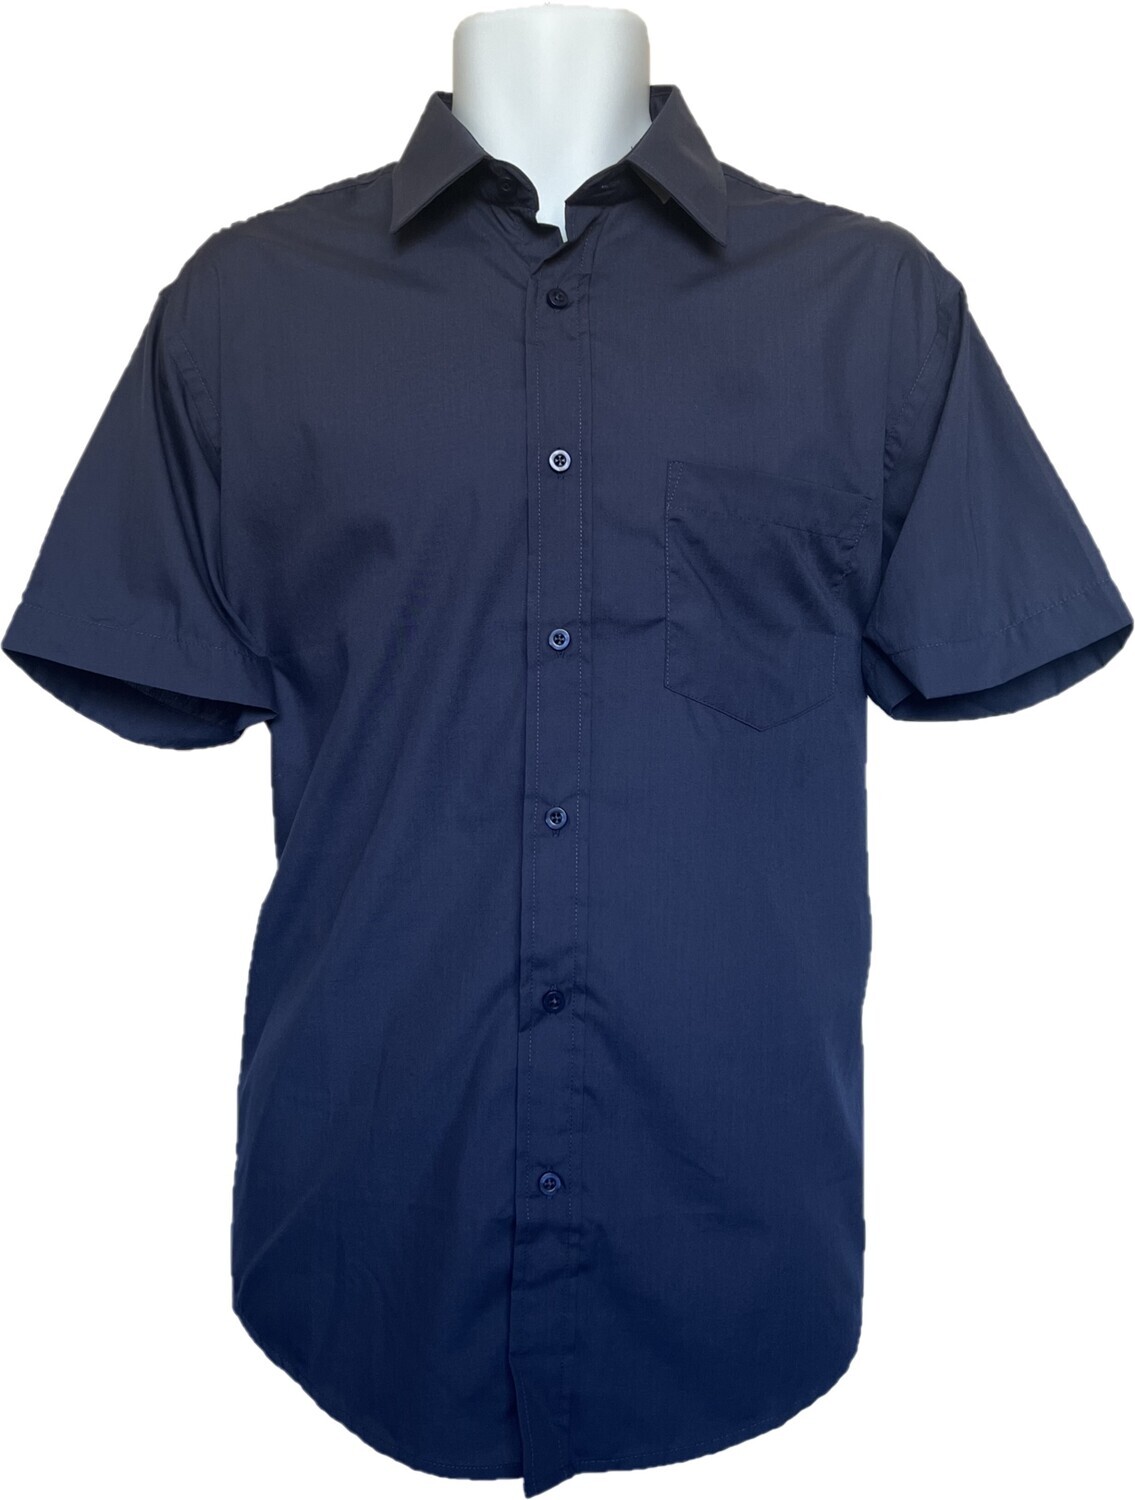 Men's Navy Mark Short Sleeve Check Shirt, Size: Small